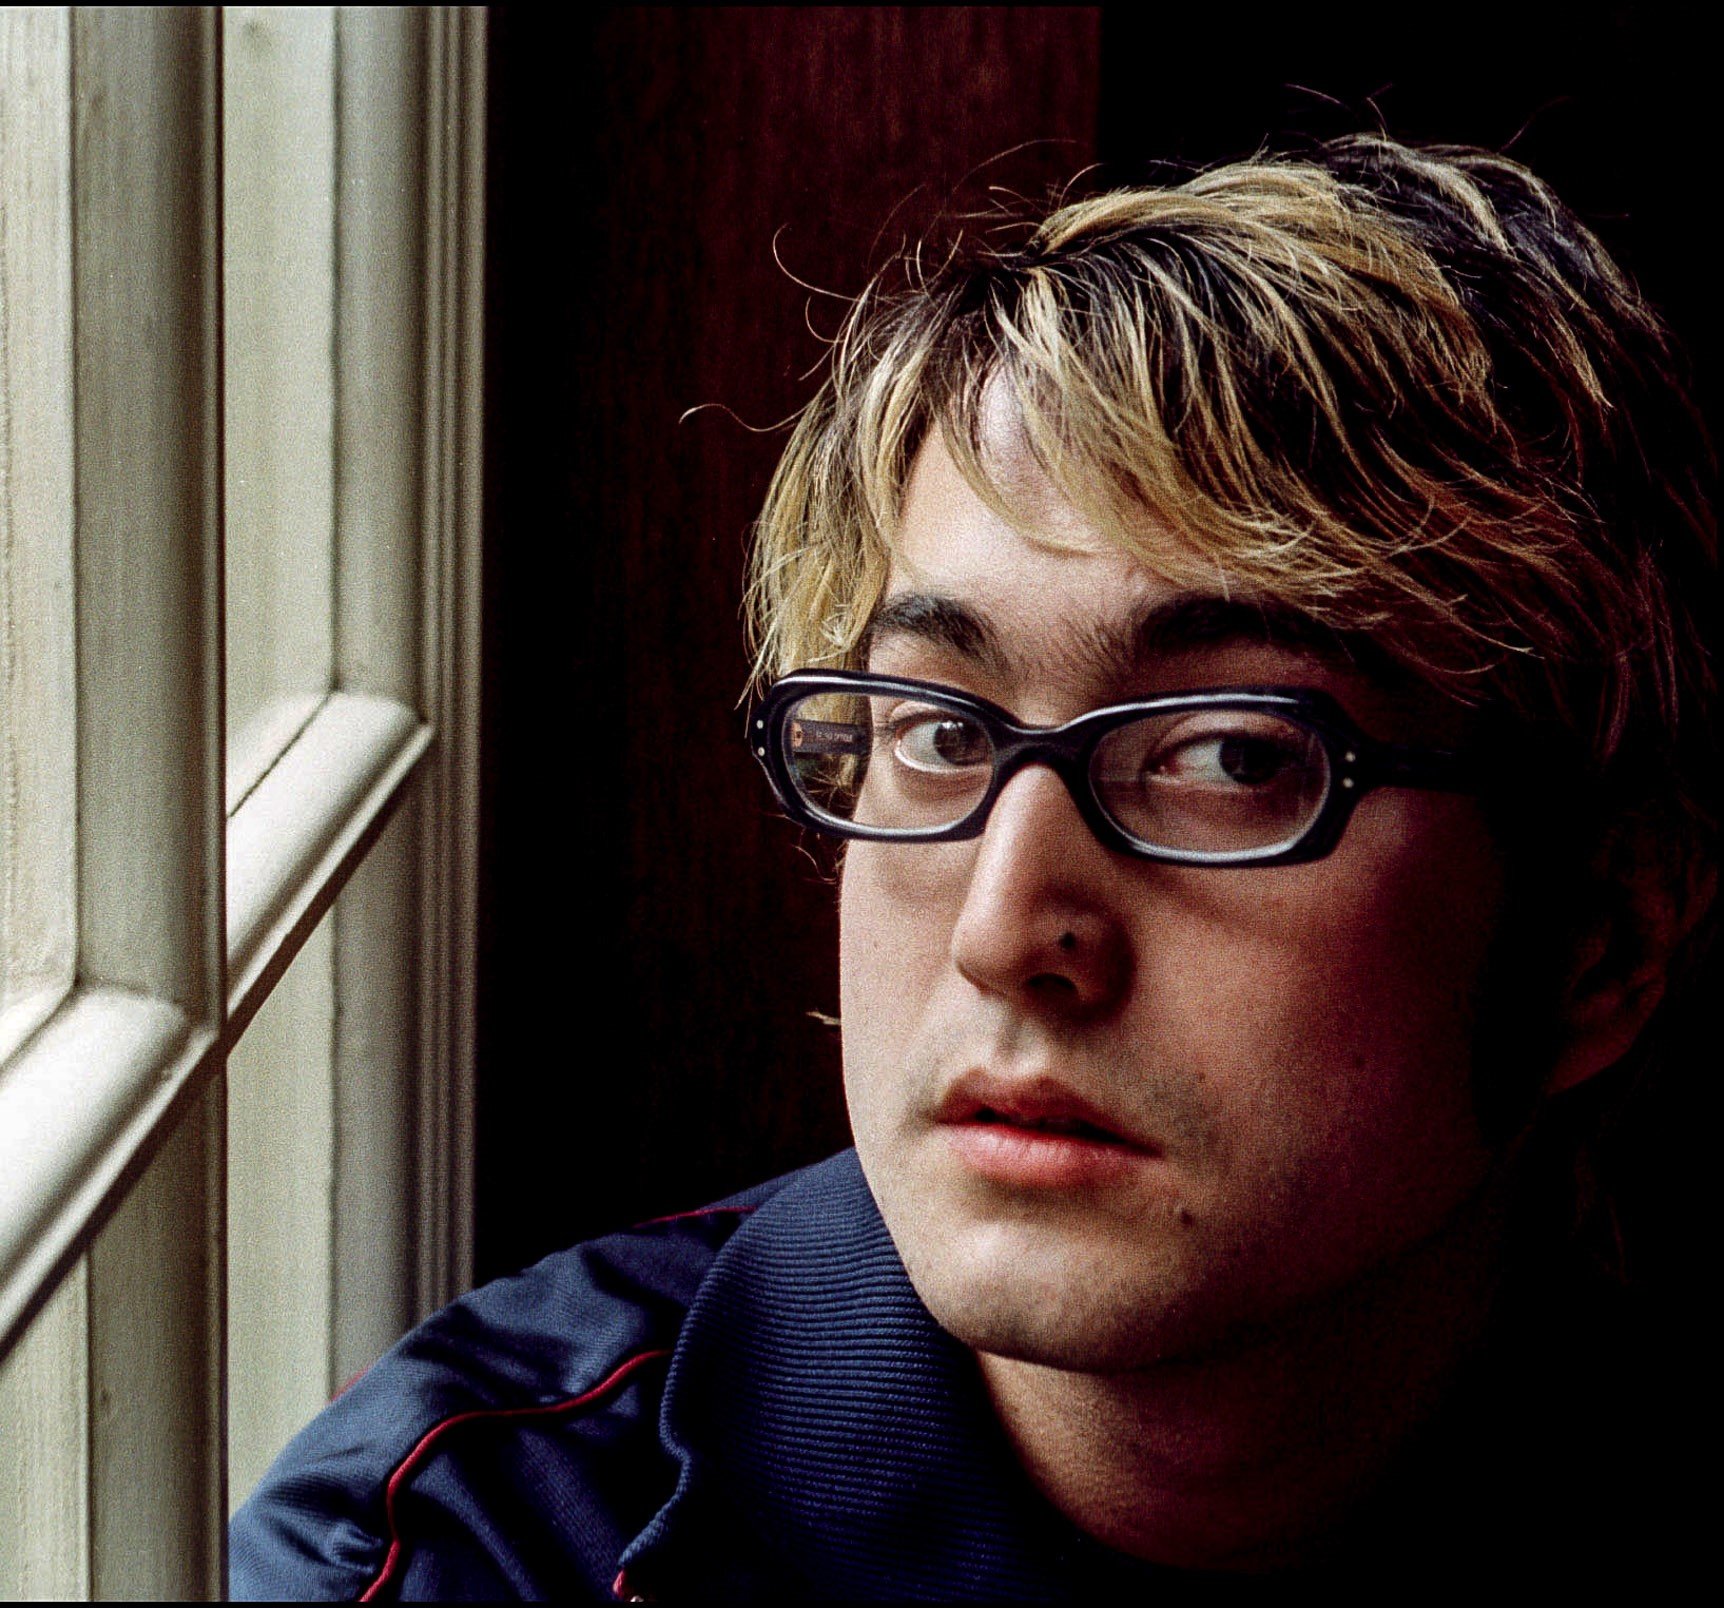 John Lennon's son, Sean Ono Lennon, near a window